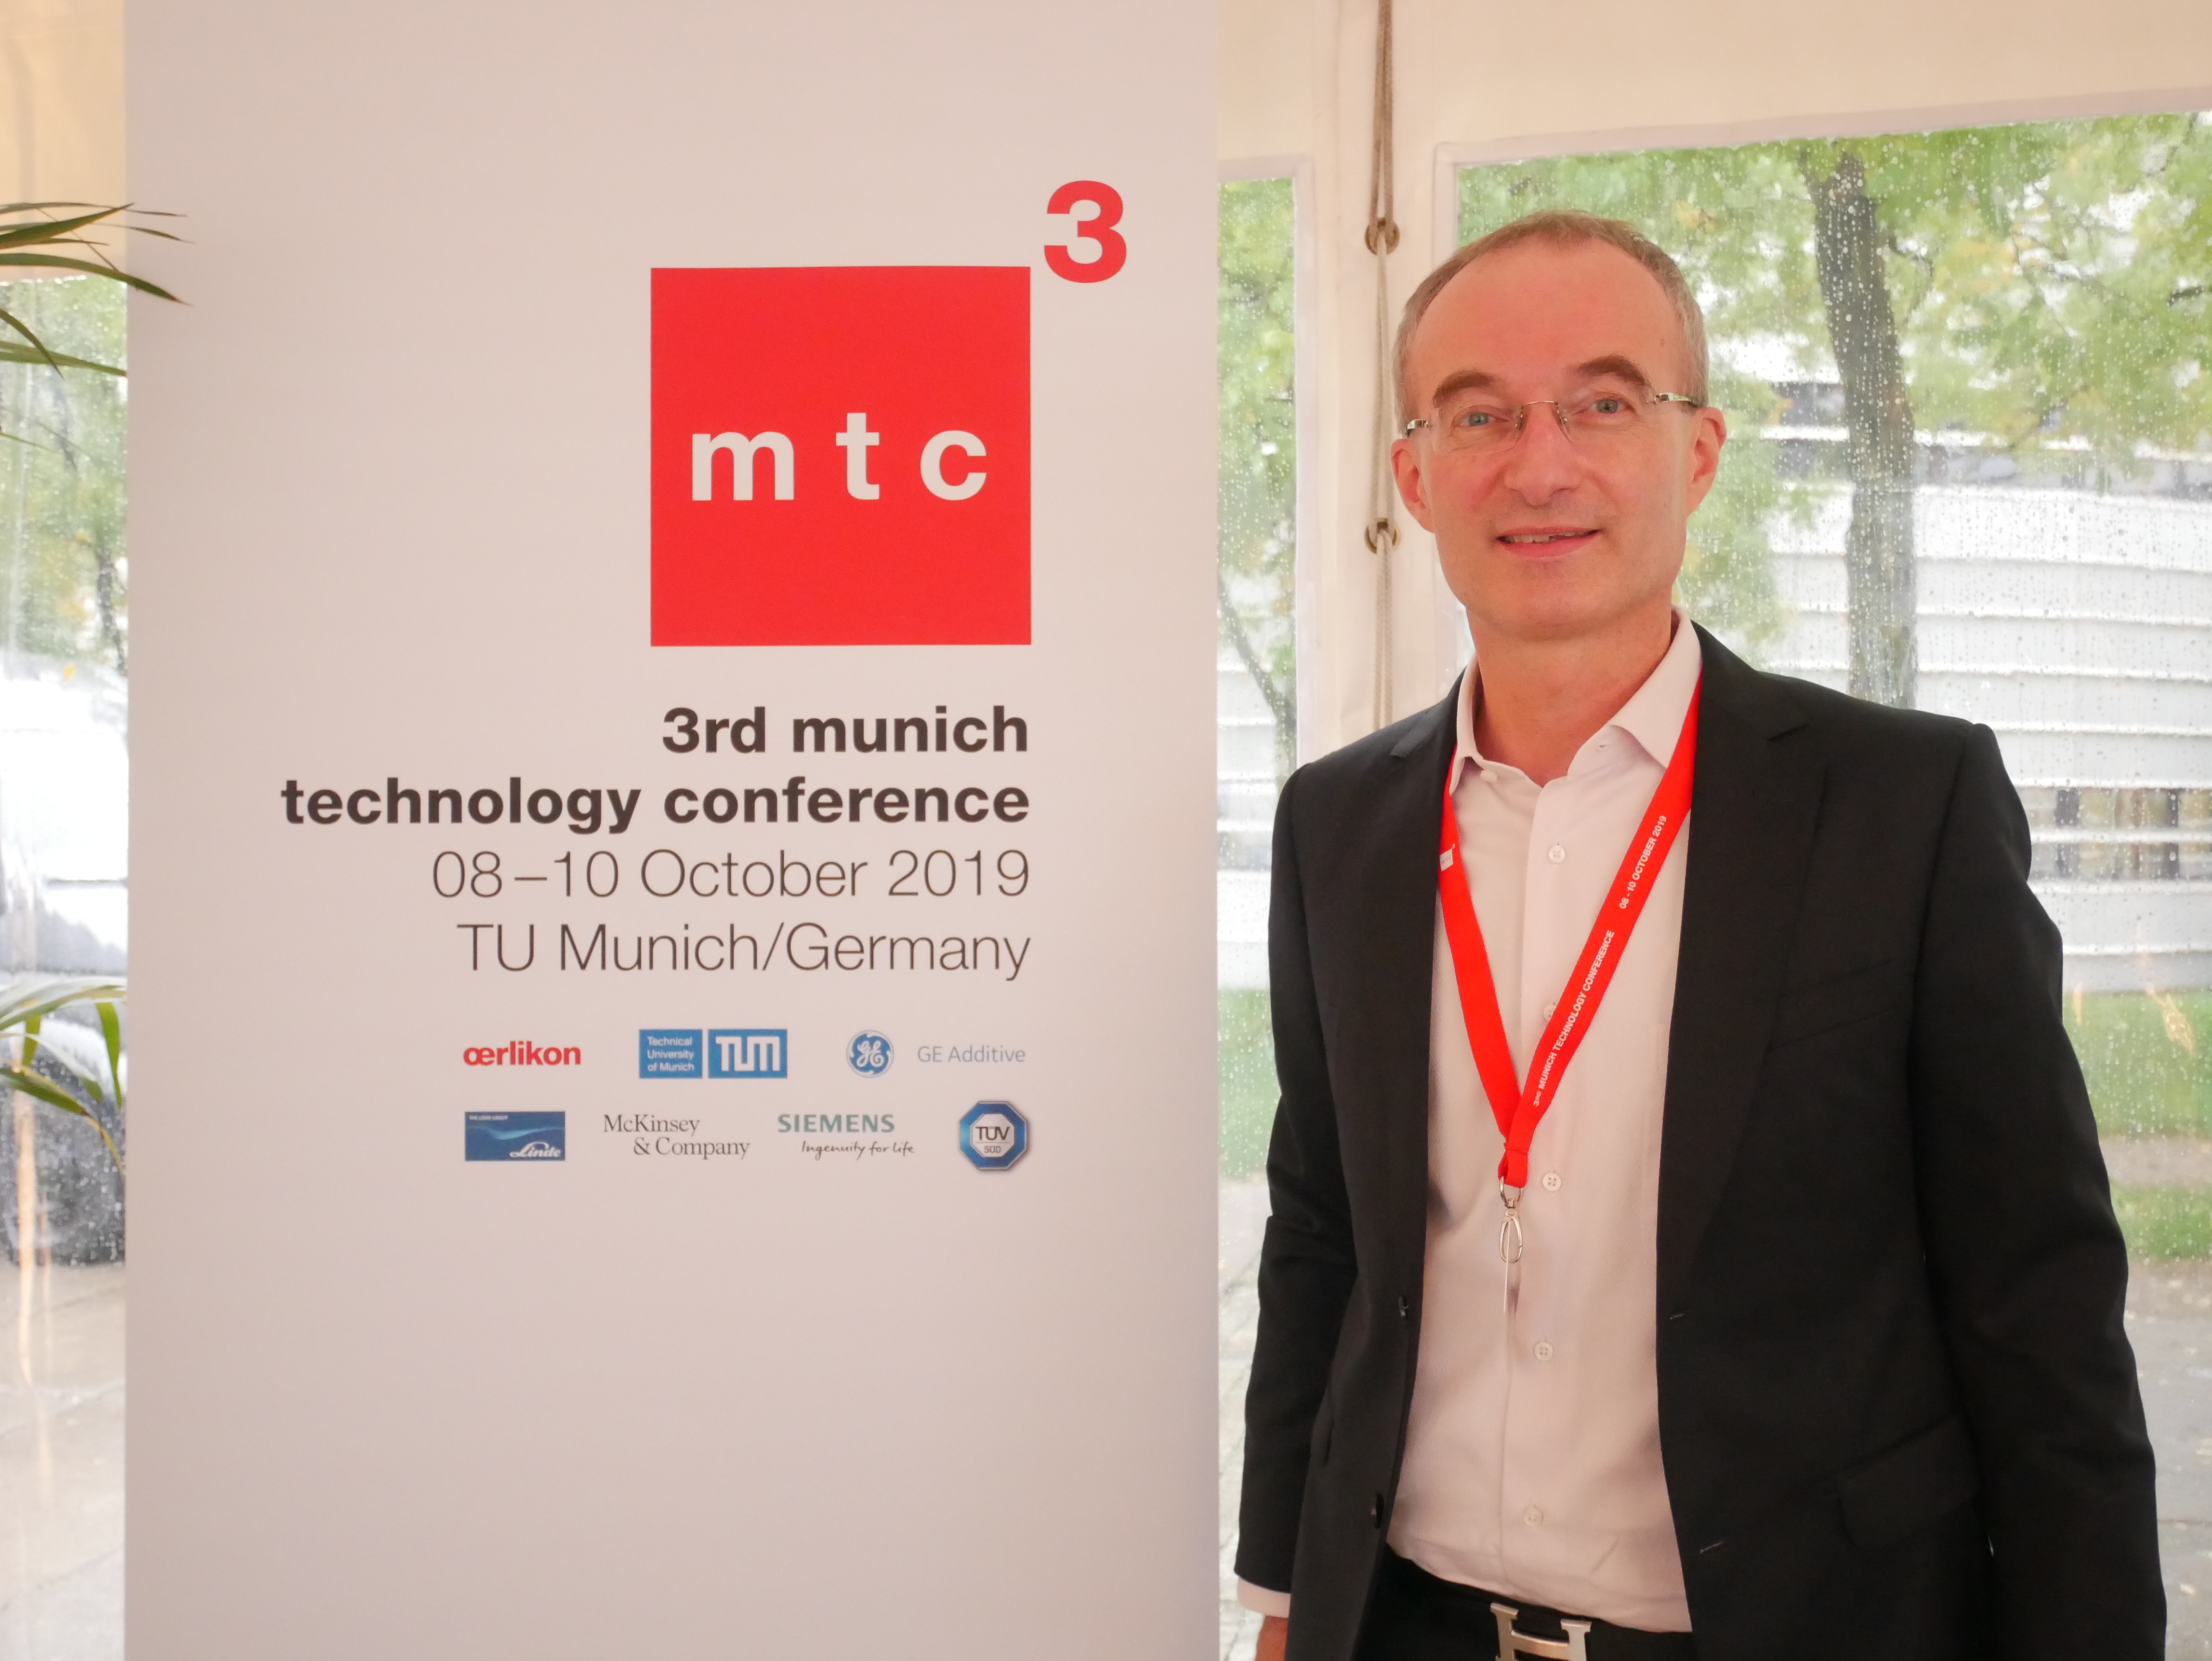 Holger Lindner, CEO of Global Product Service Division, TÜV SÜD. Photo by Tia Vialva.